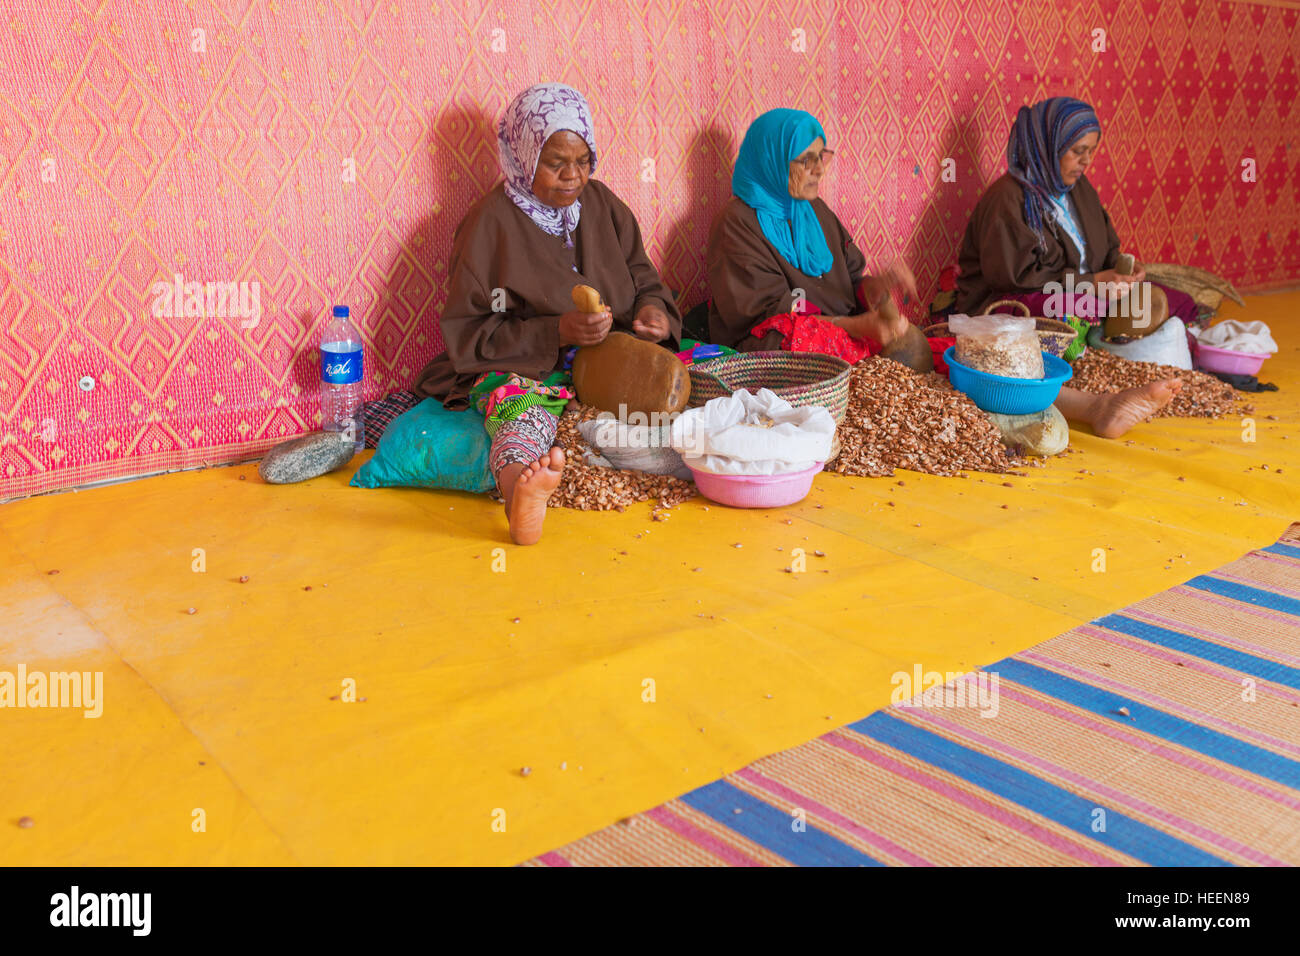 Woman producing argan oil, near Essaouira, Morocco Stock Photo